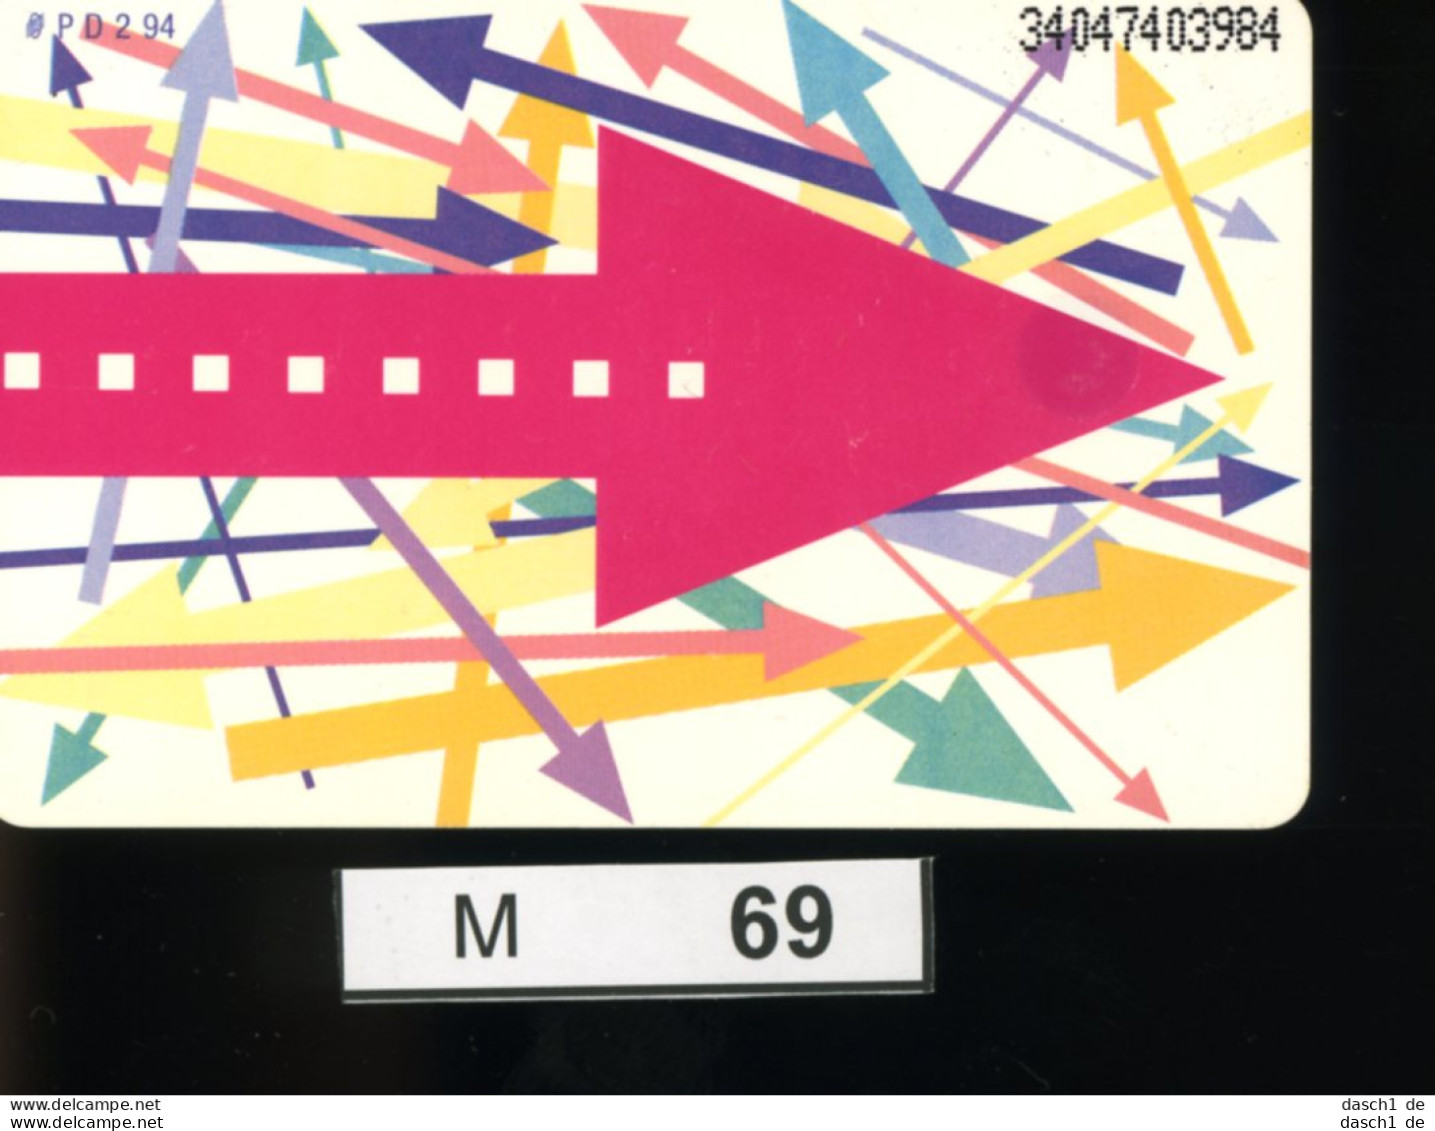 M069, Deutschland, TK, Standardkarte Telekom, 12 DM, 1994 - P & PD-Serie : Sportello Della D. Telekom